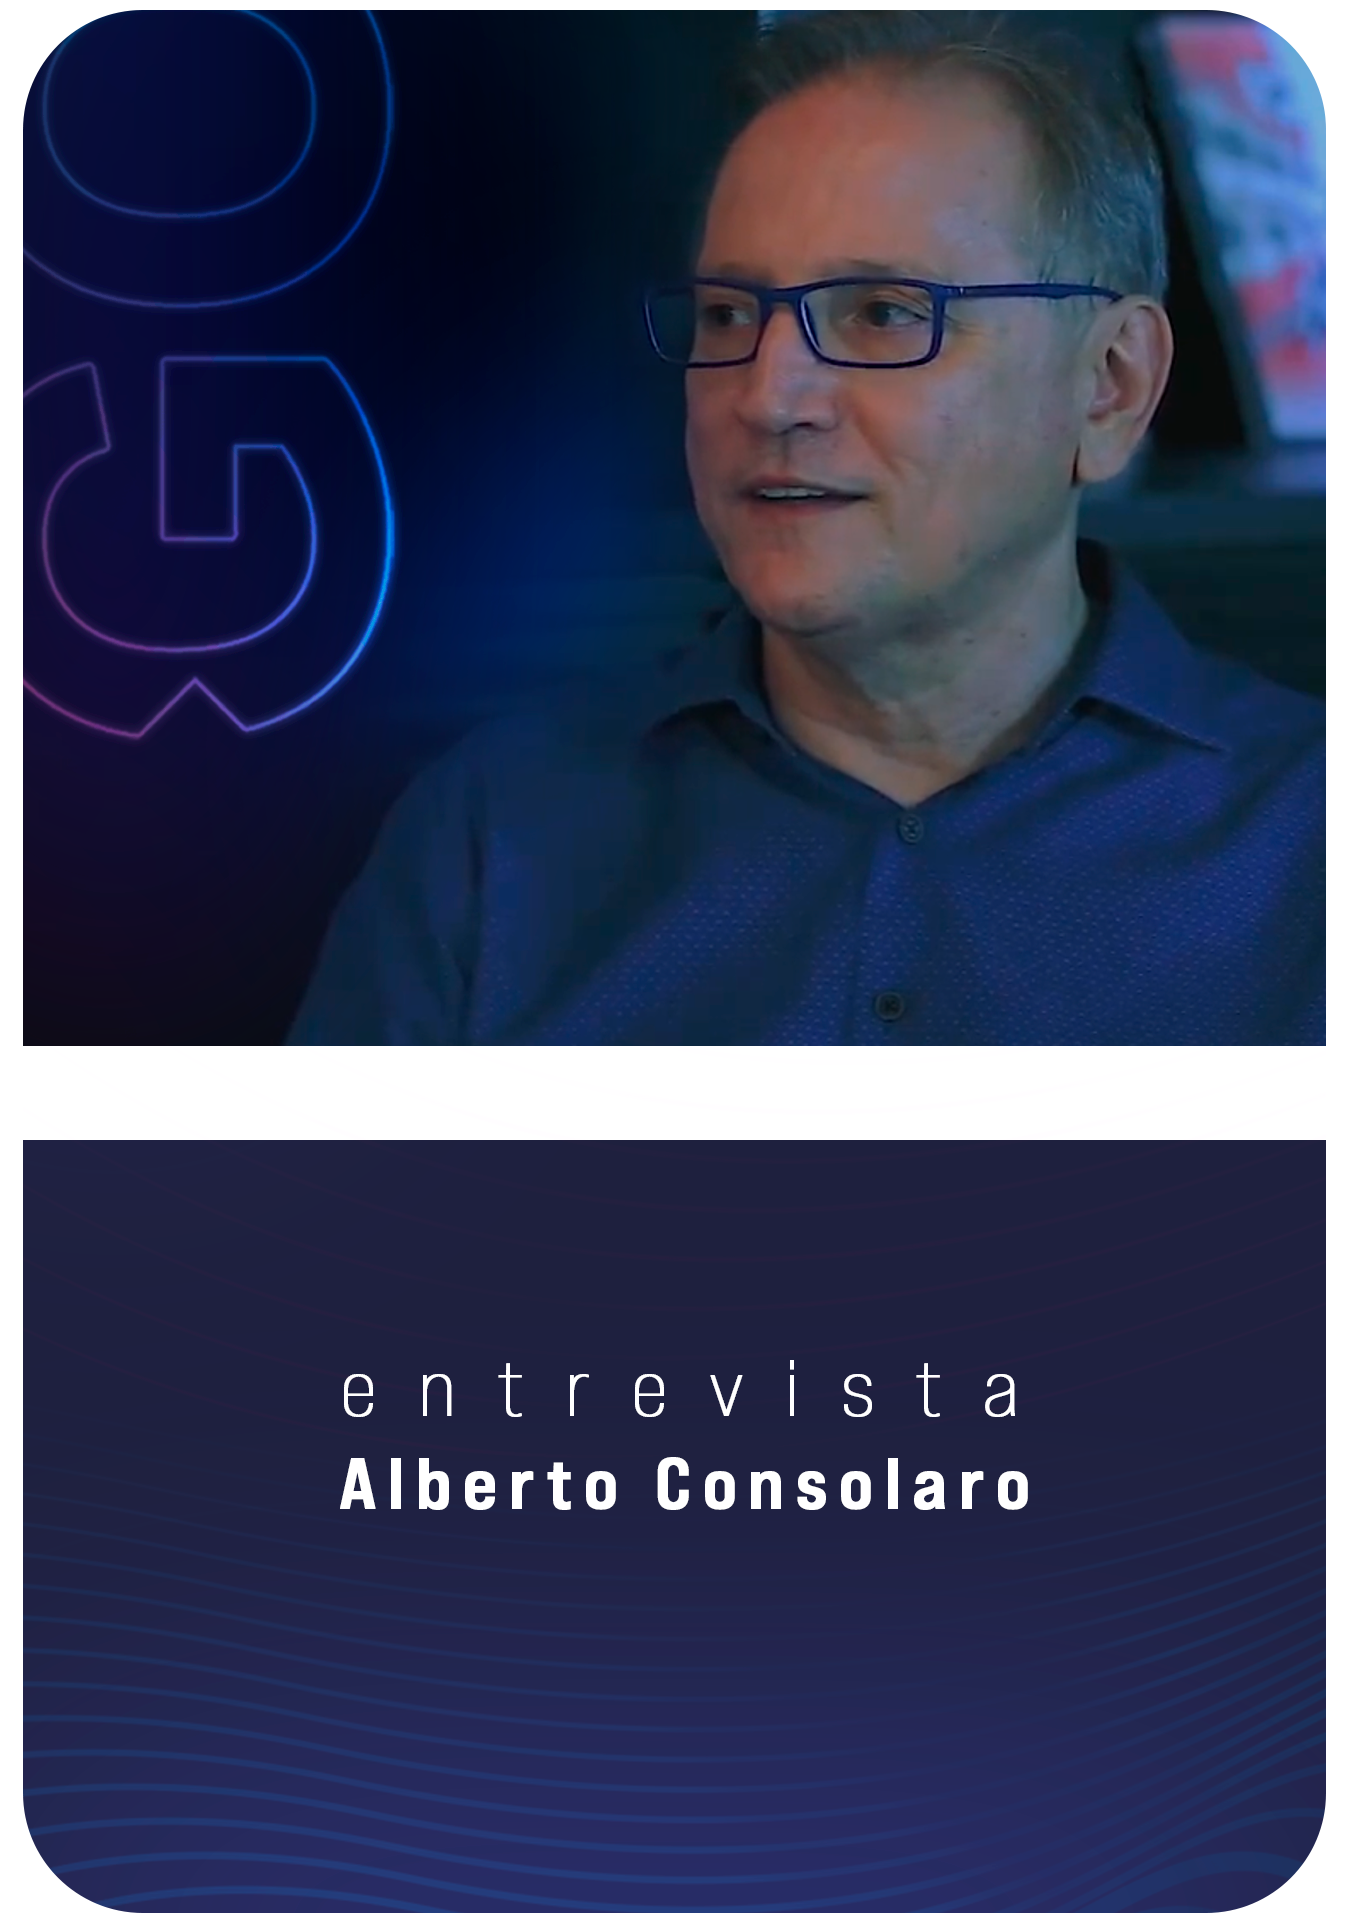 Dr. Alberto Consolaro